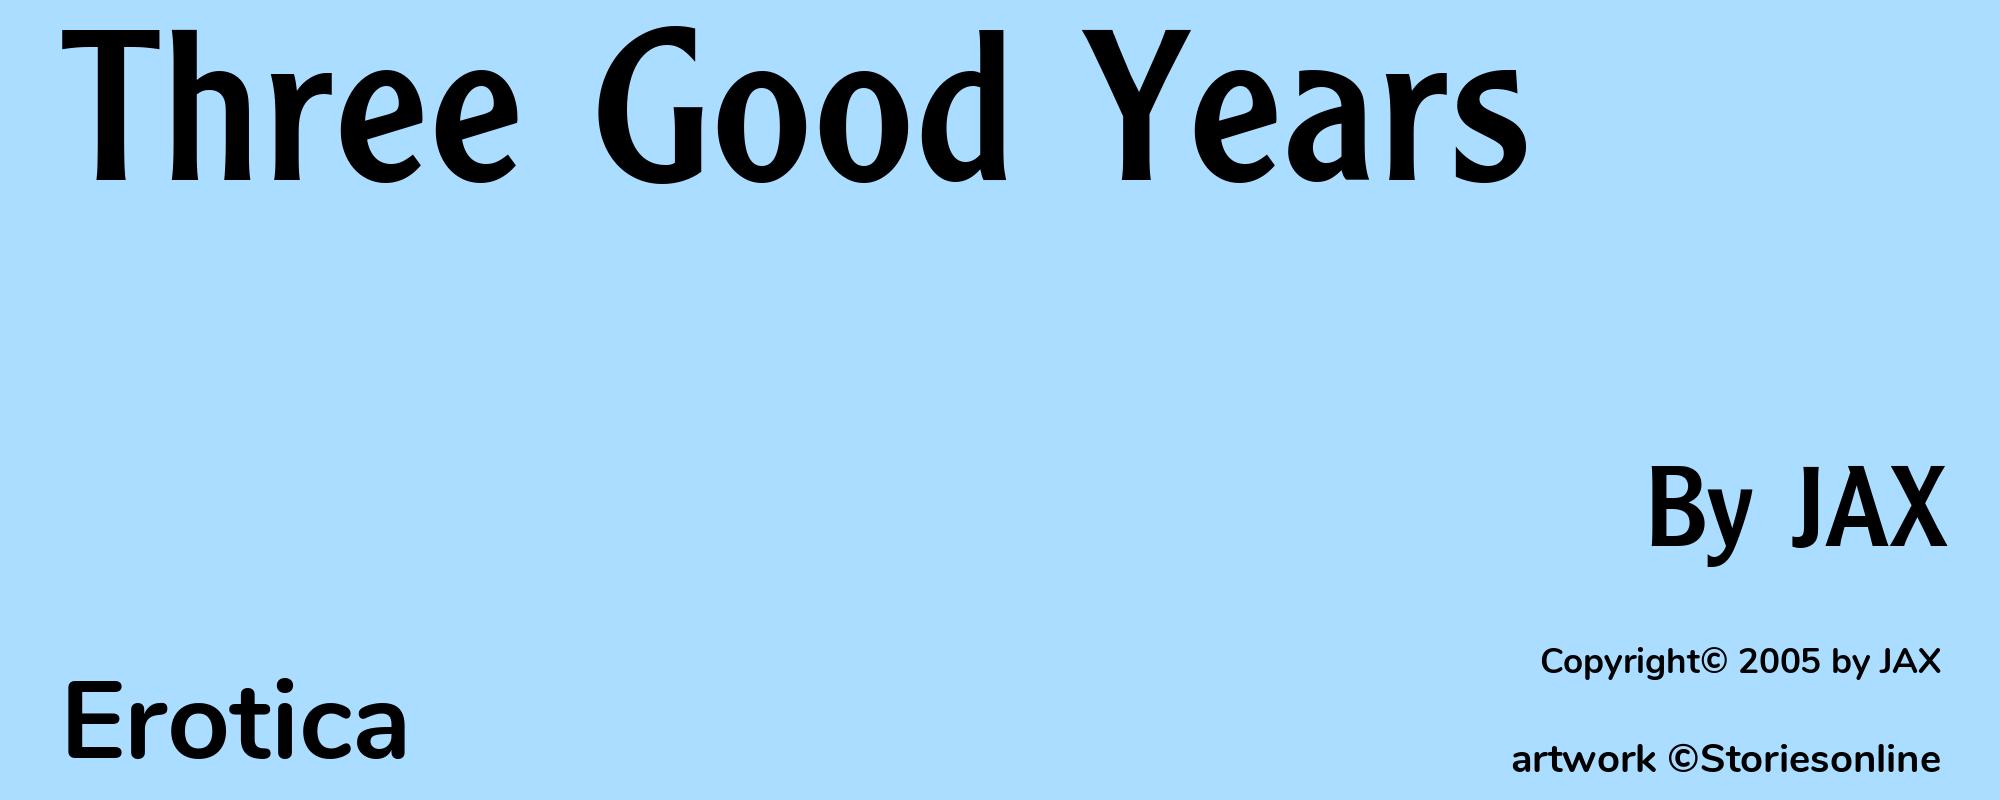 Three Good Years - Cover